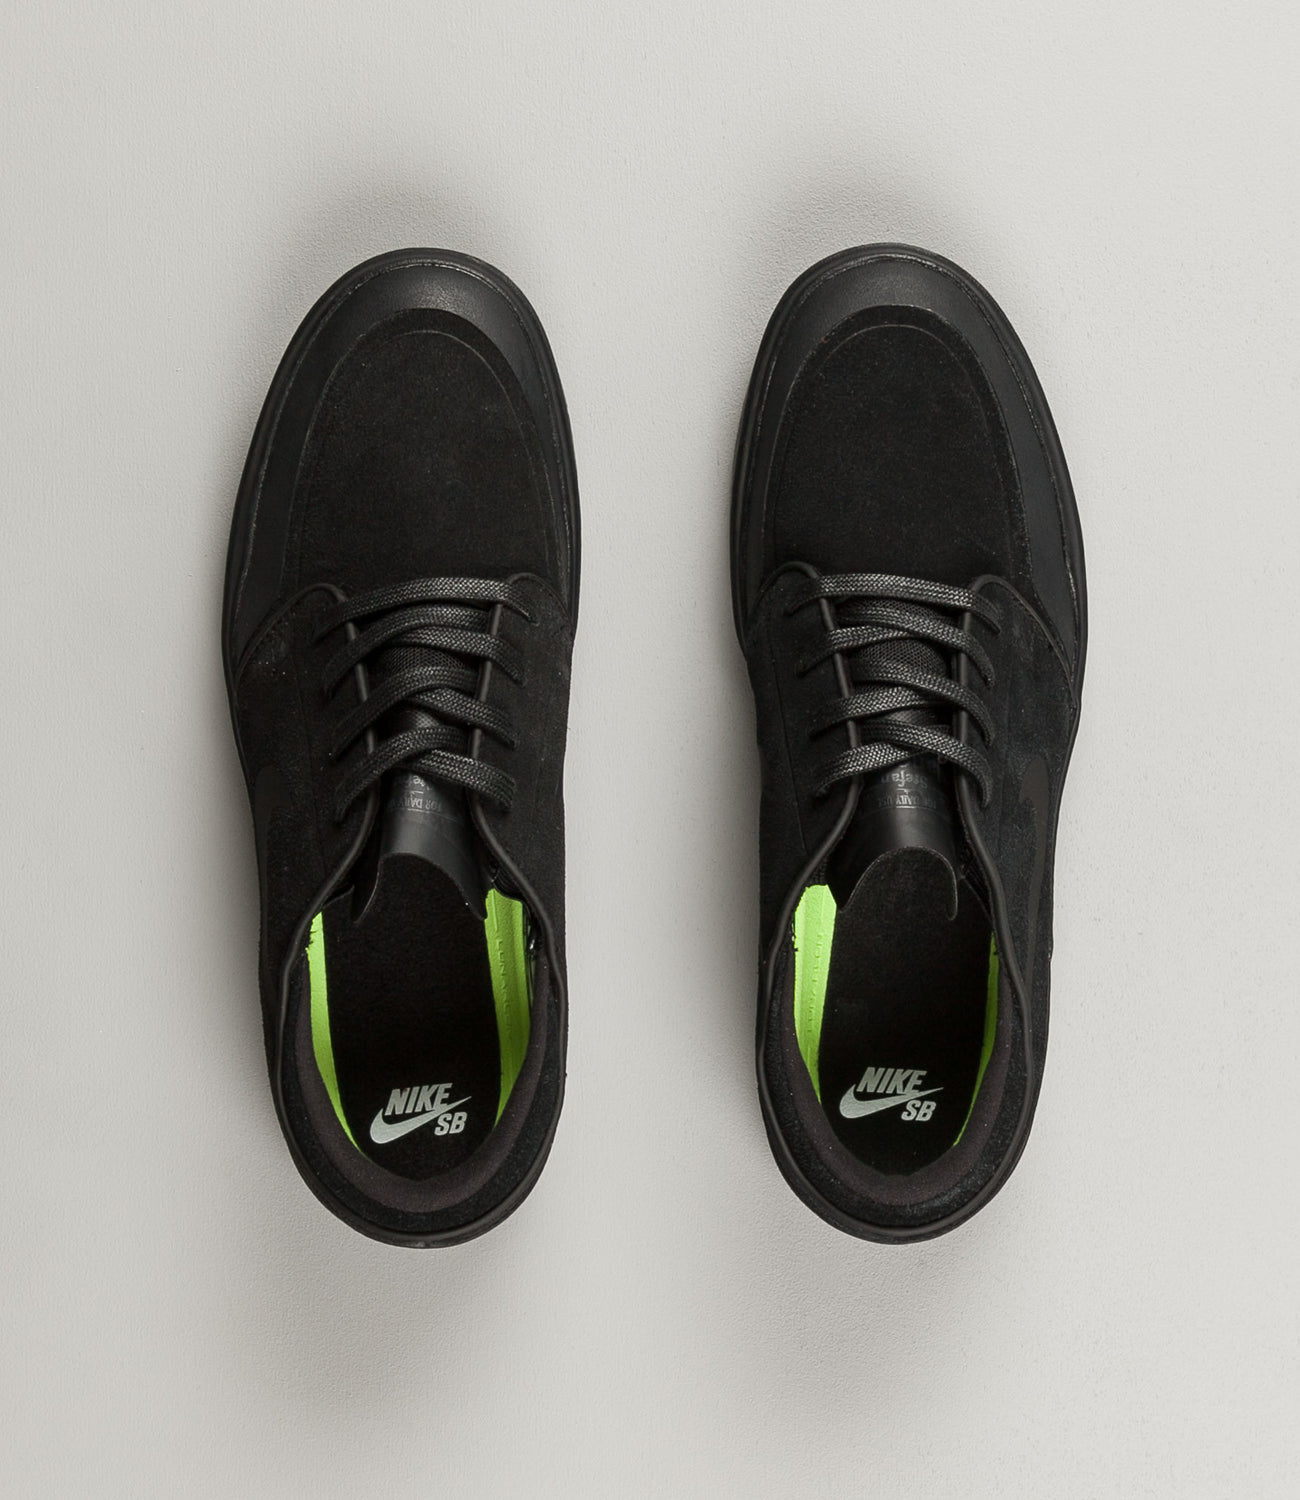 Nike SB Stefan Janoski Hyperfeel Shoes Black / Black Anthracite | Flatspot